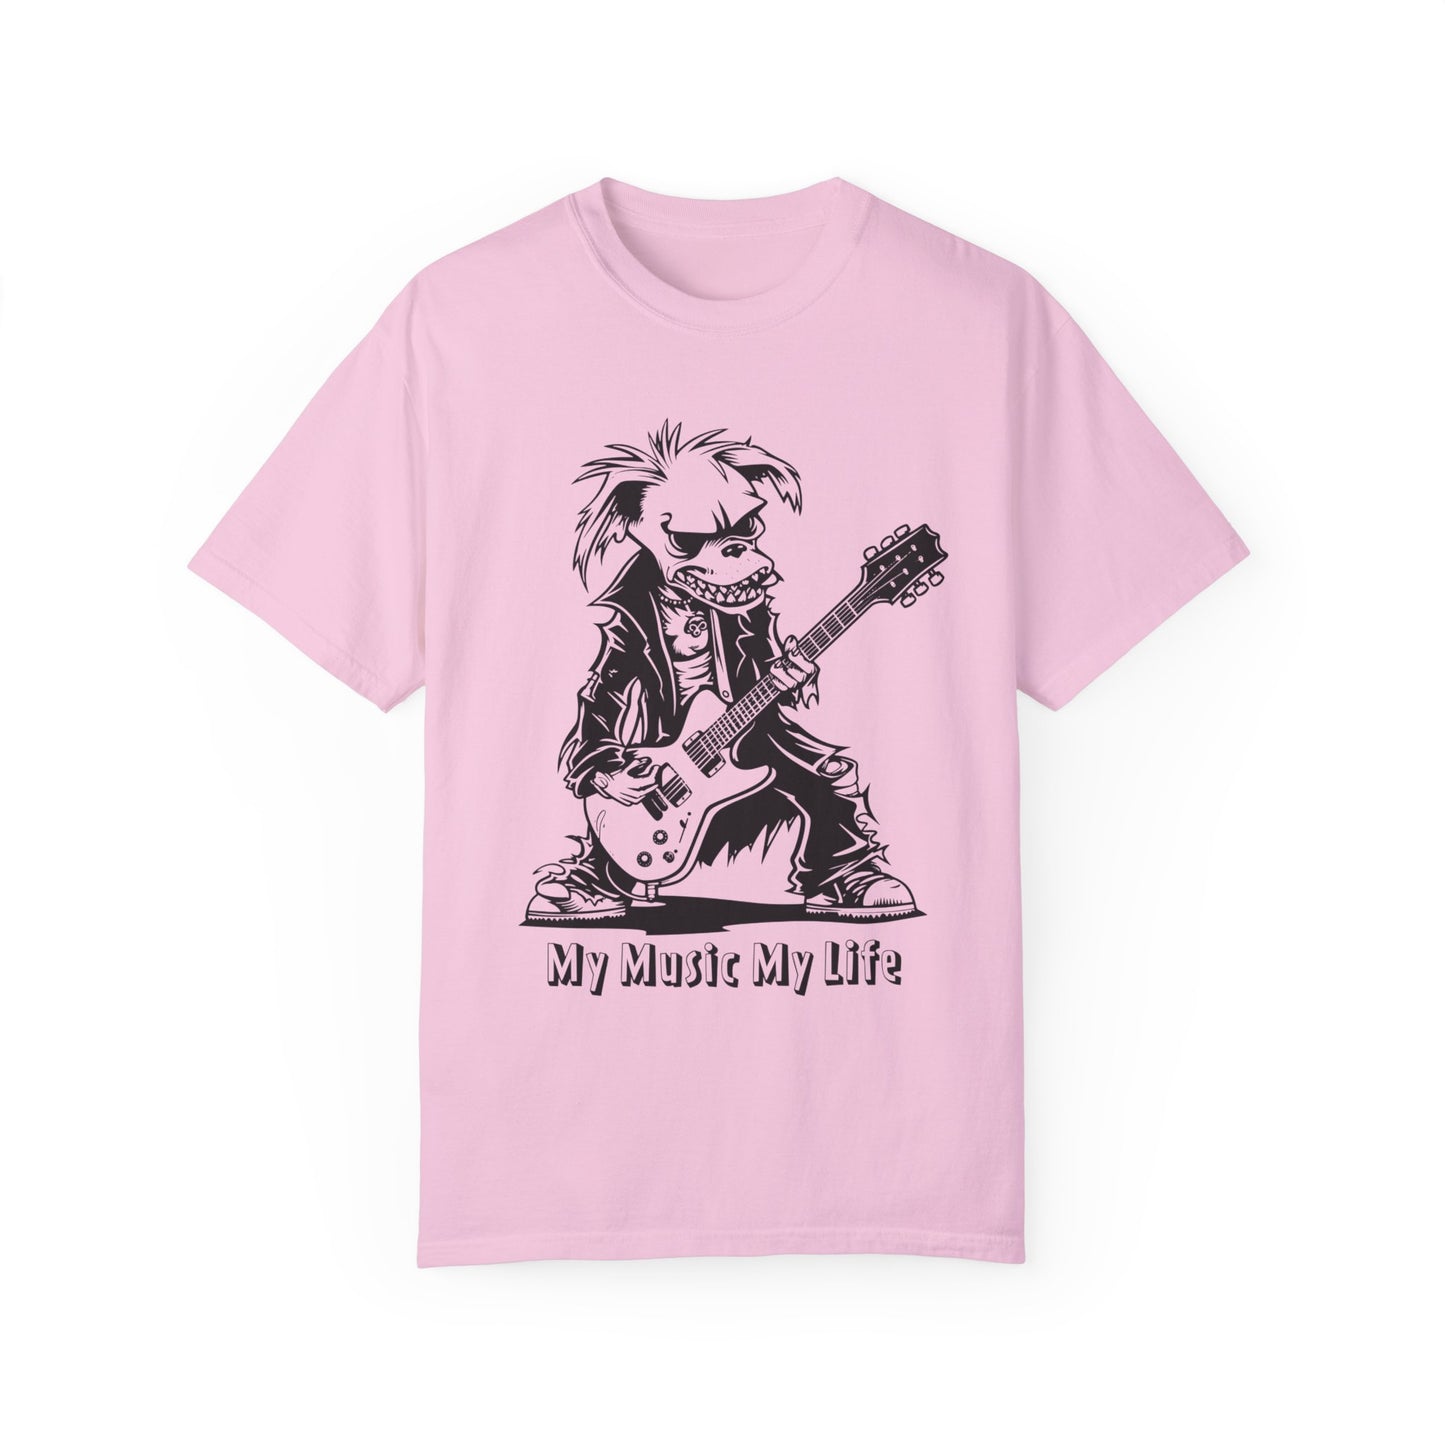 Comfort Colors Music Shirt, Music Party Shirt, Music Festival T-Shirt, Dog plays Guitar Shirt, Funny Dog Shirt, Pet Lover Shirt, Music Tee